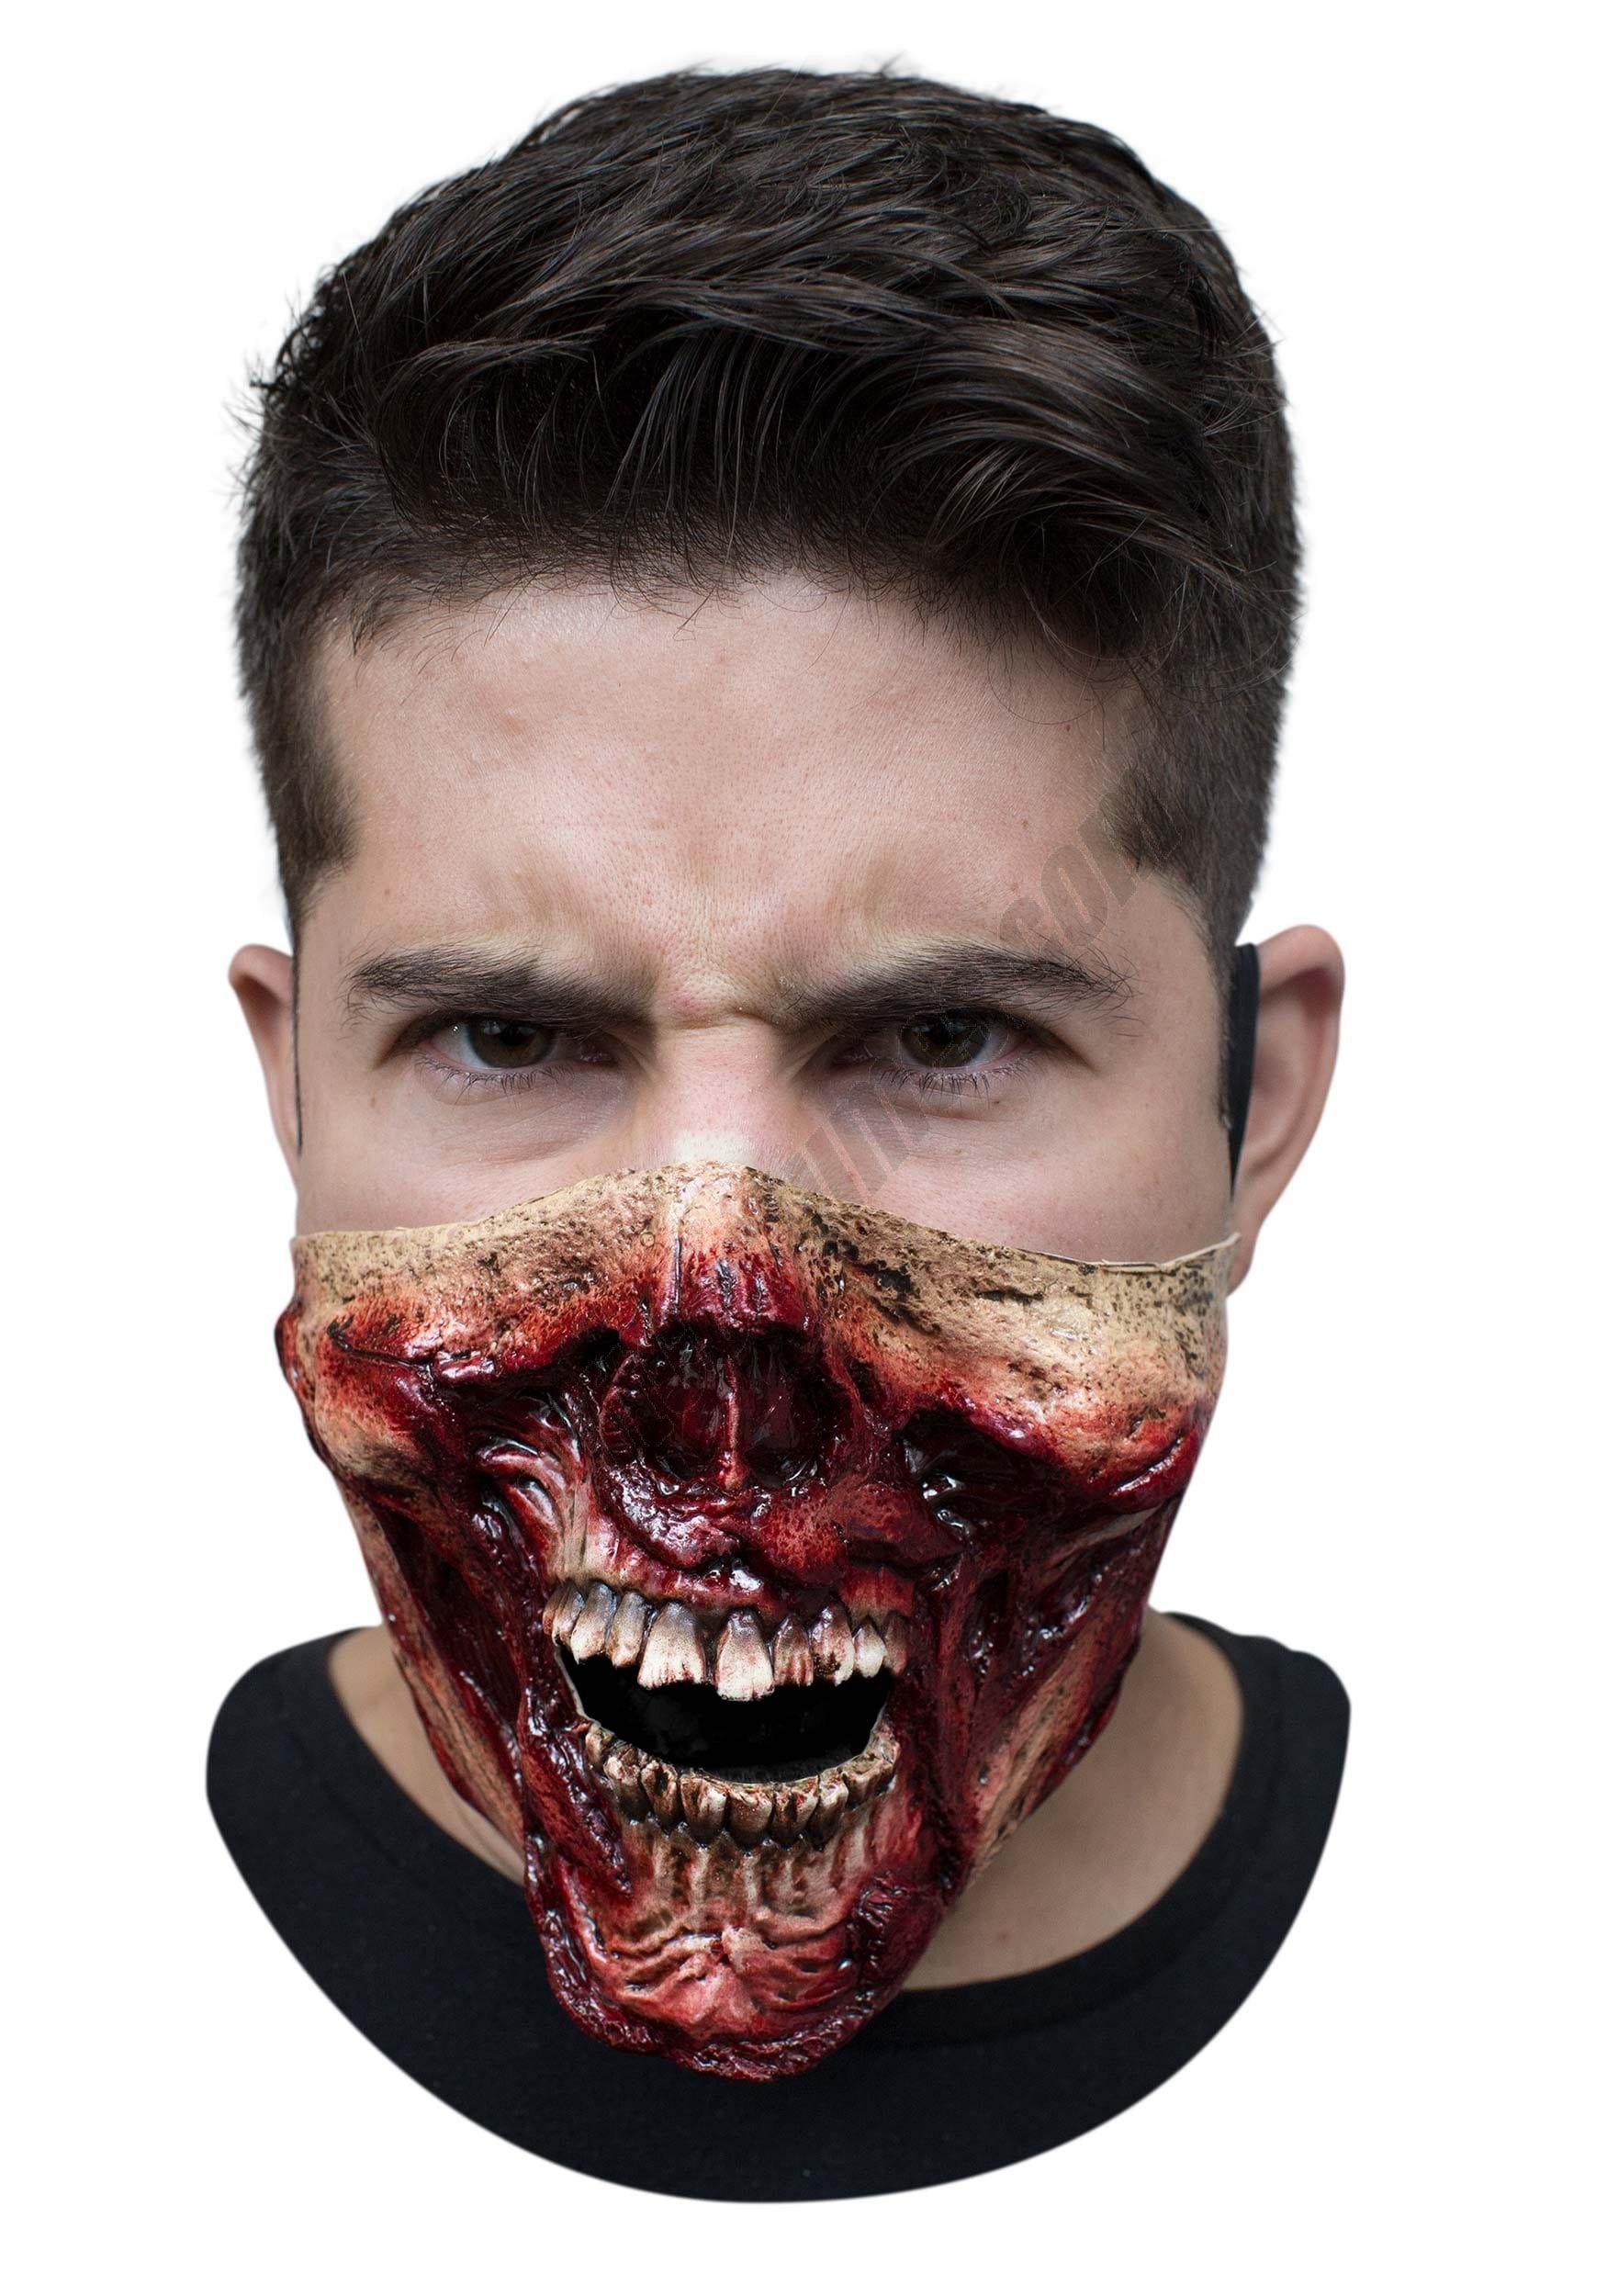 Half Muzzle Zombie Mask Promotions - Half Muzzle Zombie Mask Promotions